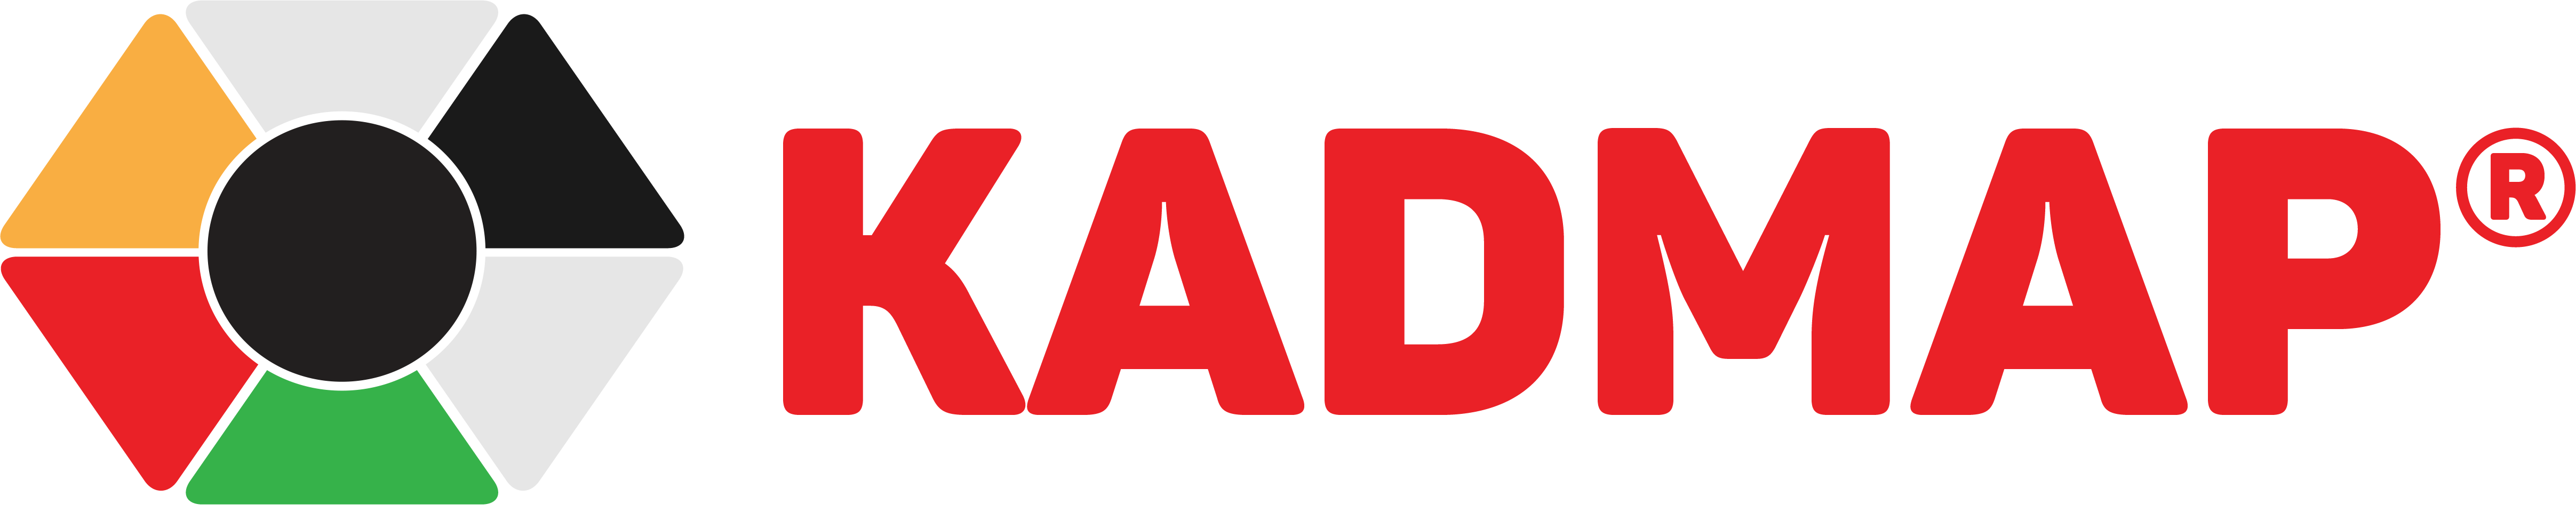 KadMap Logo